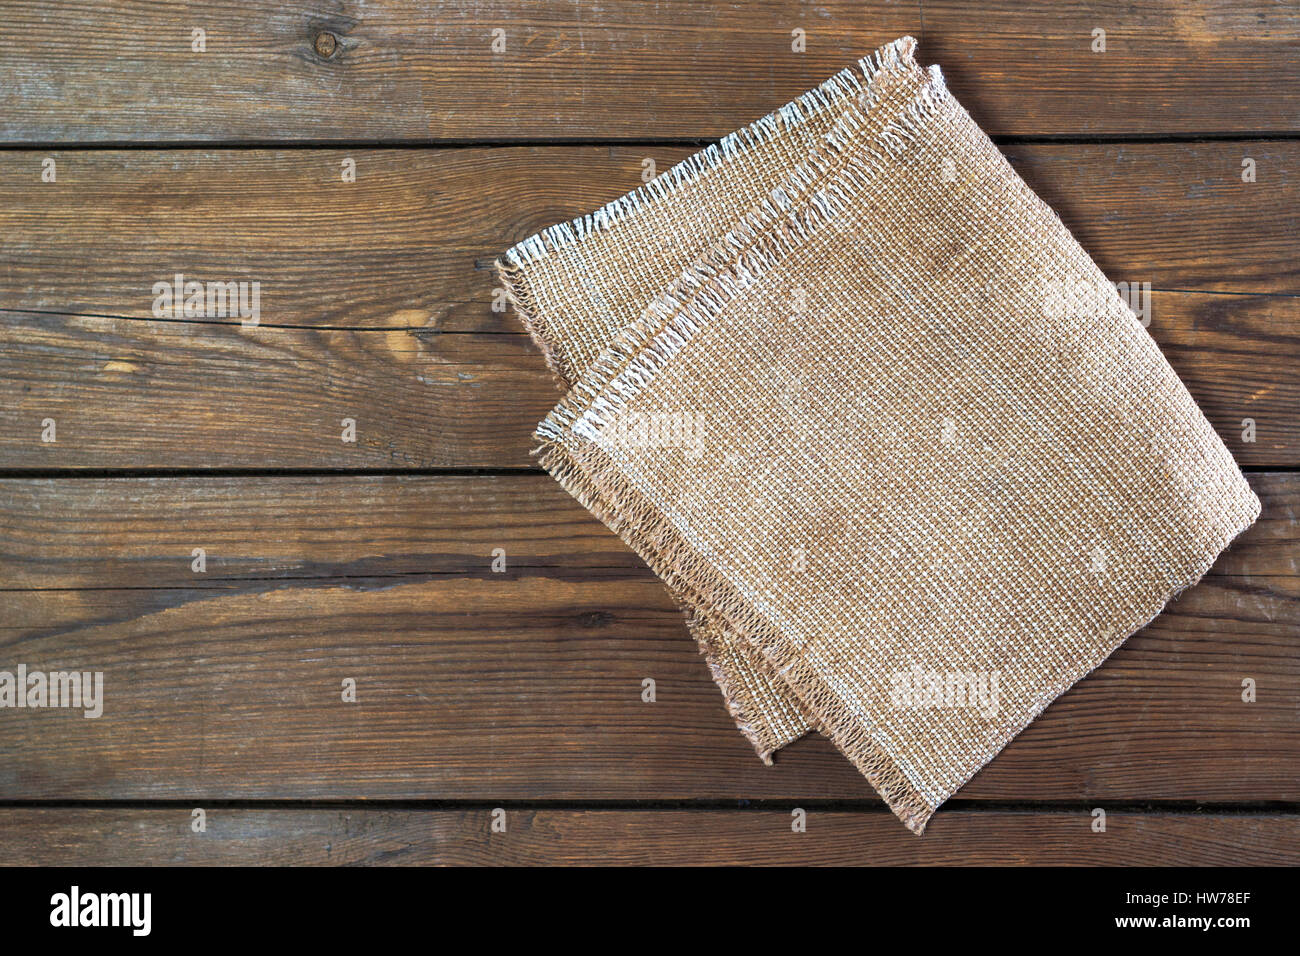 Linen napkin on vintage wooden kitchen table. Top view. Flat lay. Stock Photo